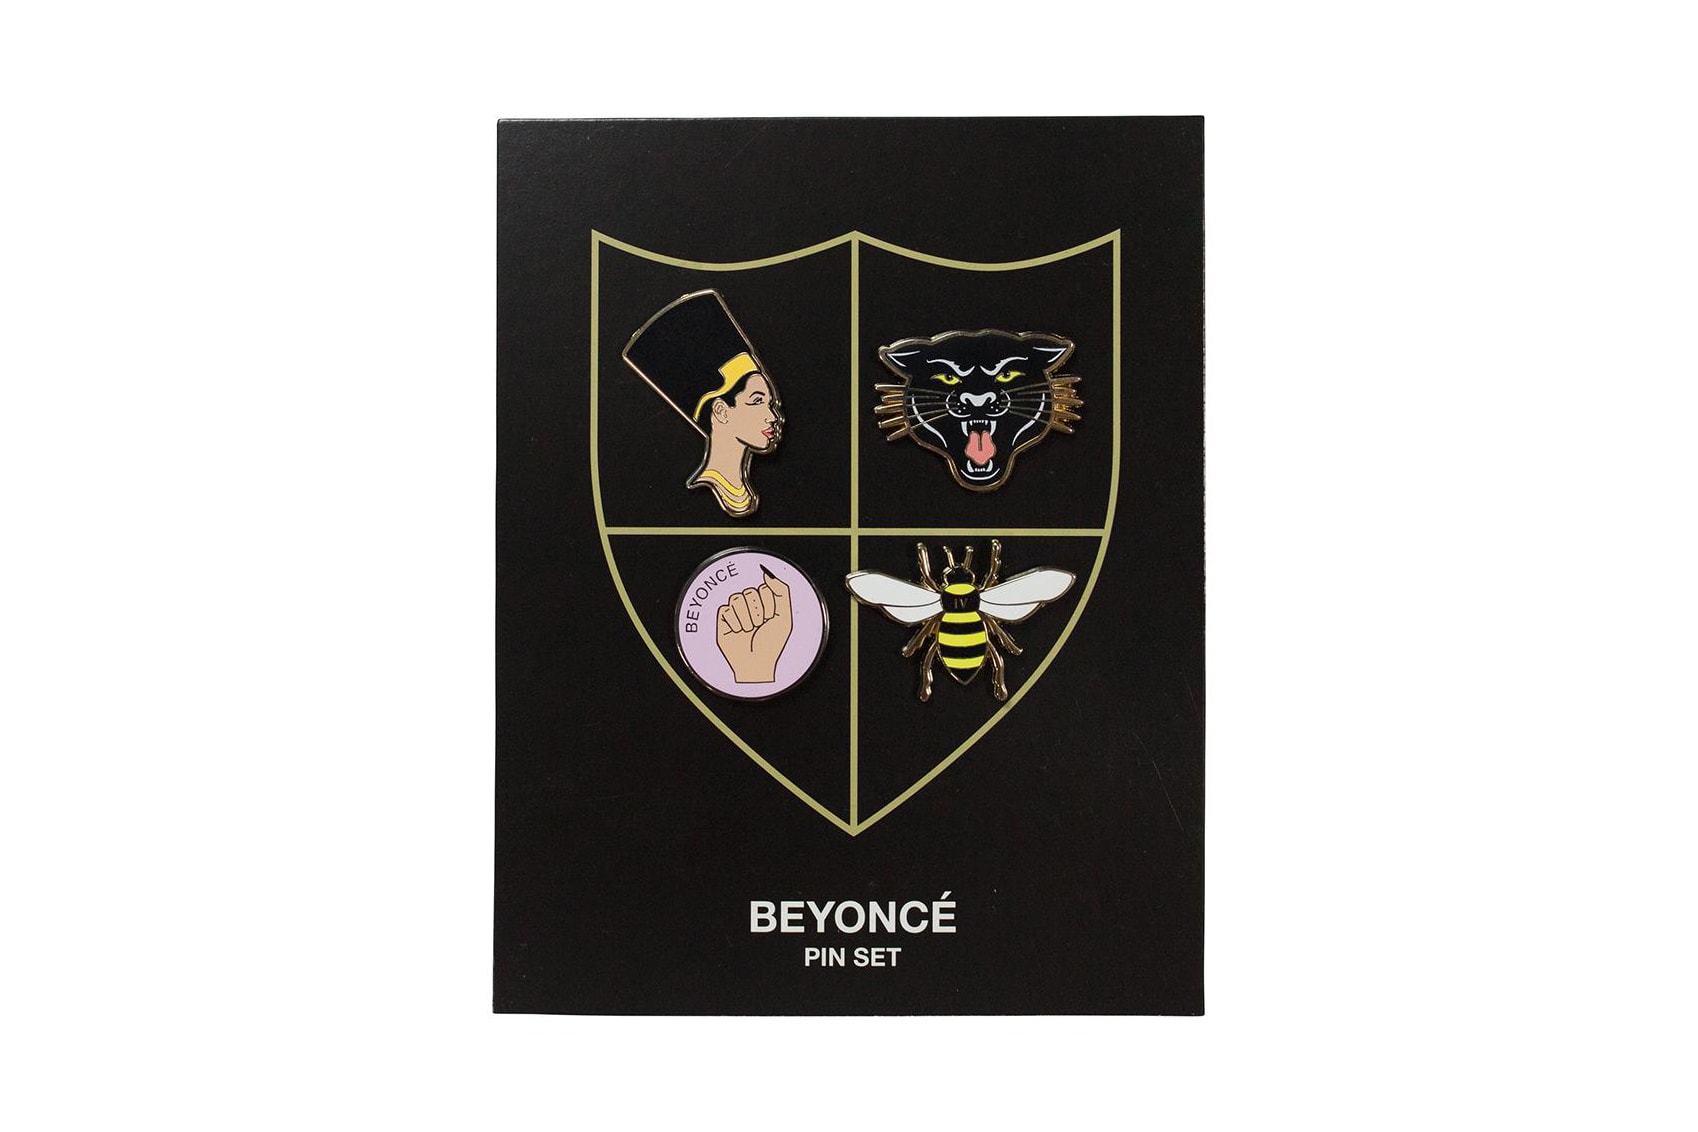 Beyoncé Drops 2018 Holiday Merch Collection